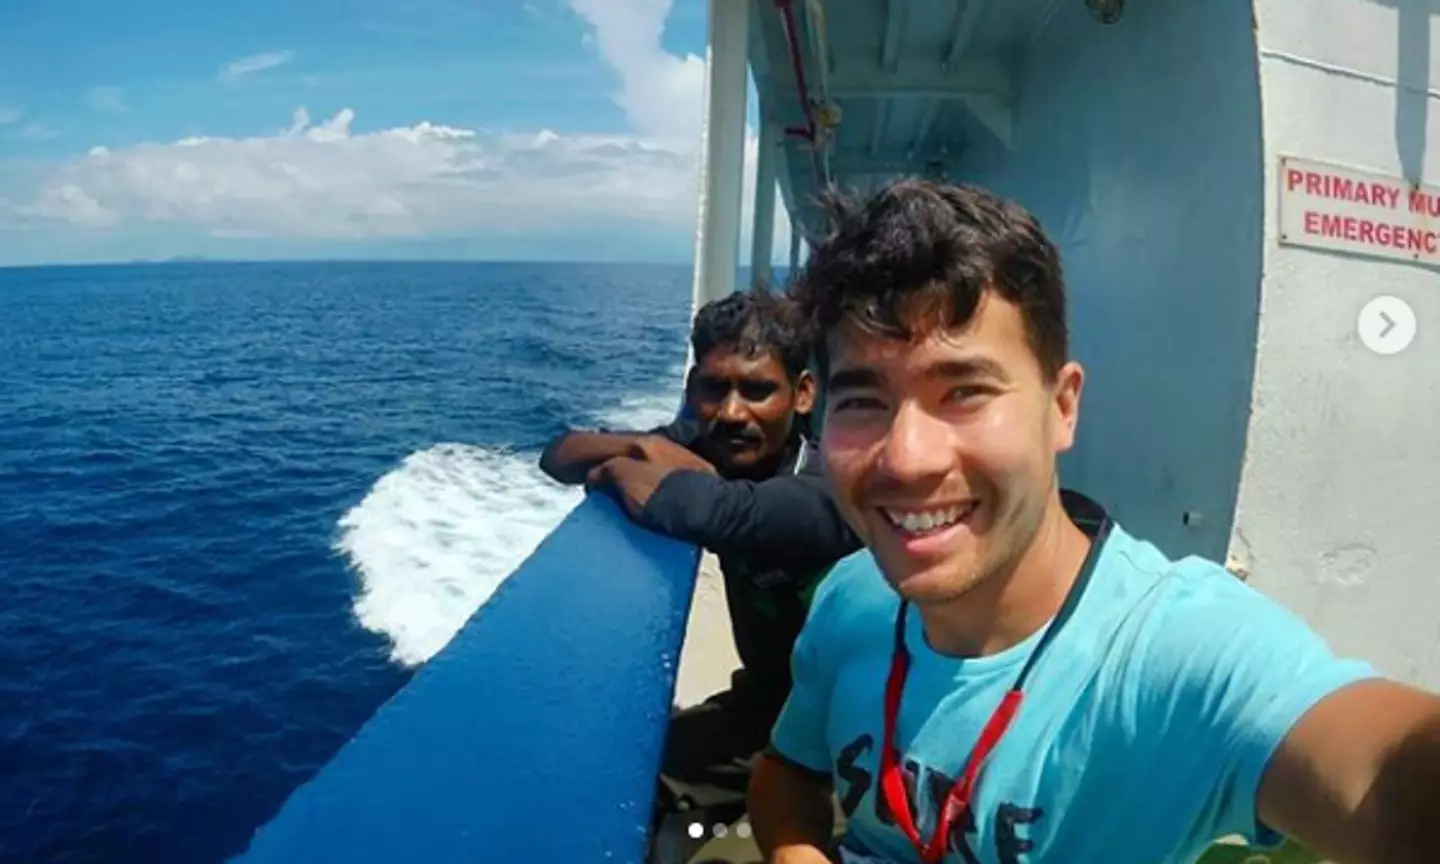 In 2018, the Sentinelese killed 26-year-old John Allen Chau.